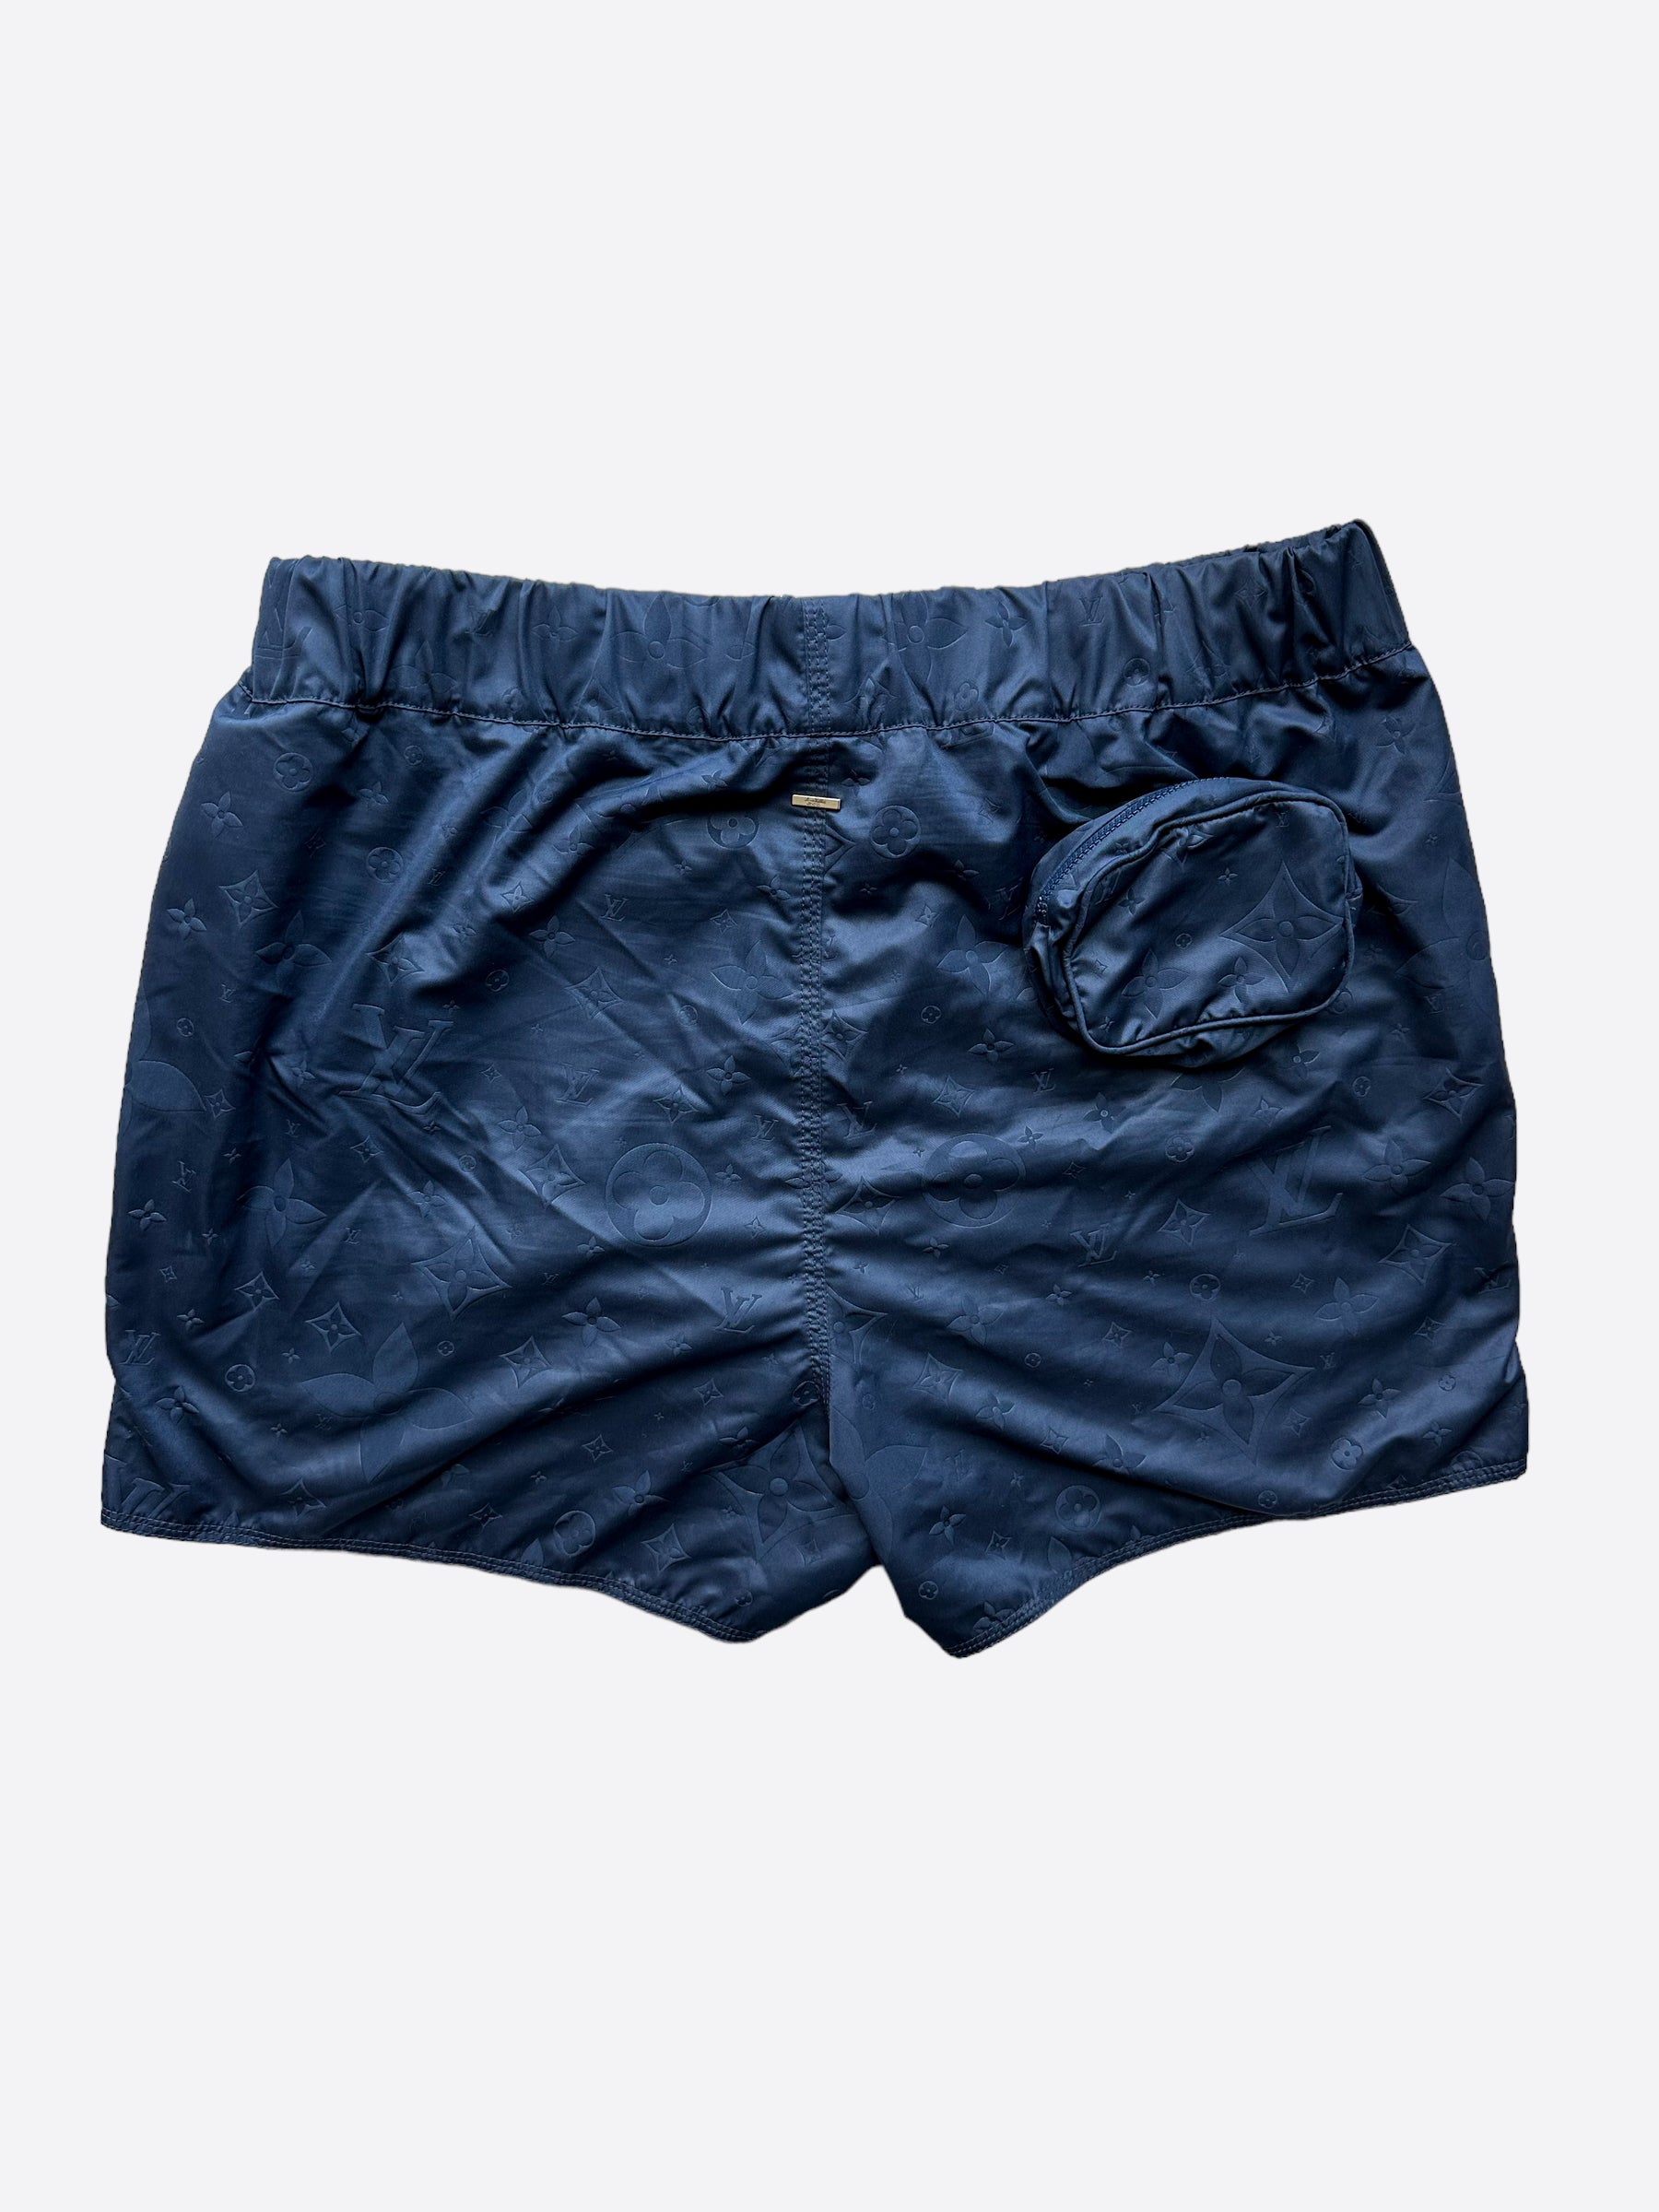 Louis Vuitton Black Swim Shorts